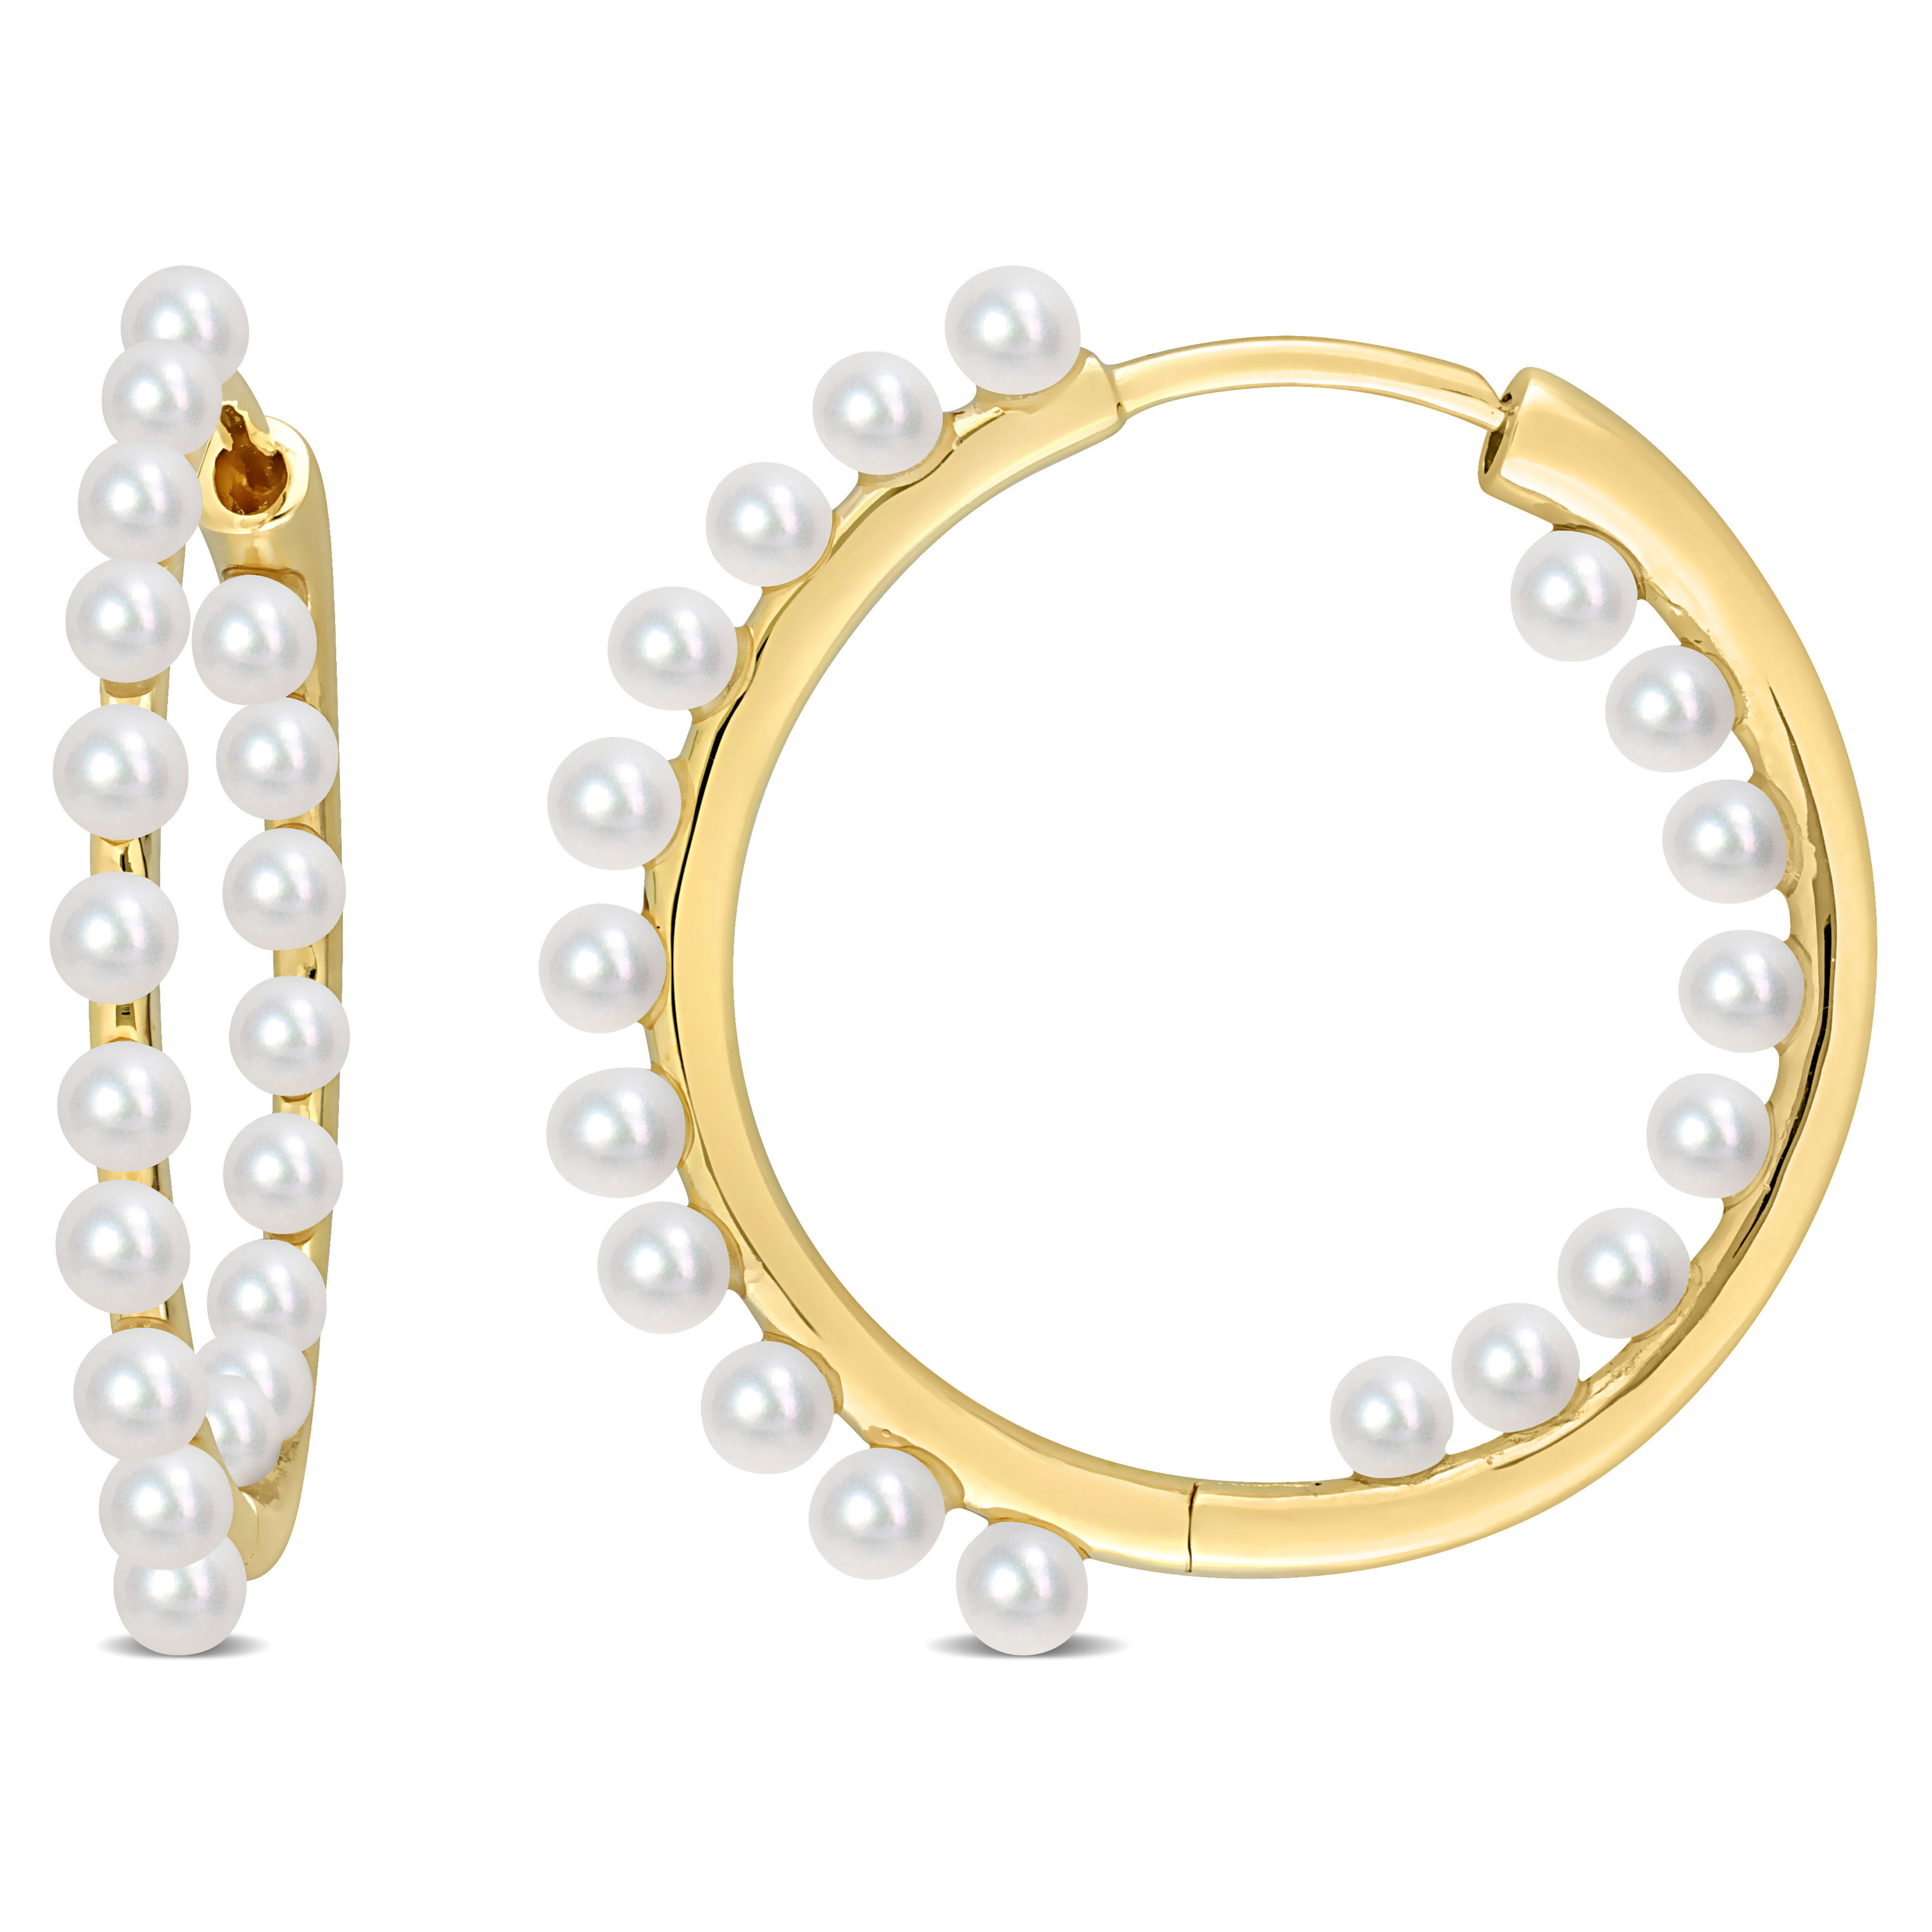 2 - 2.5 MM White Cultured Freshwater Pearl Inside Outside Hoop Leverback Earrings in 14k Yellow Gold